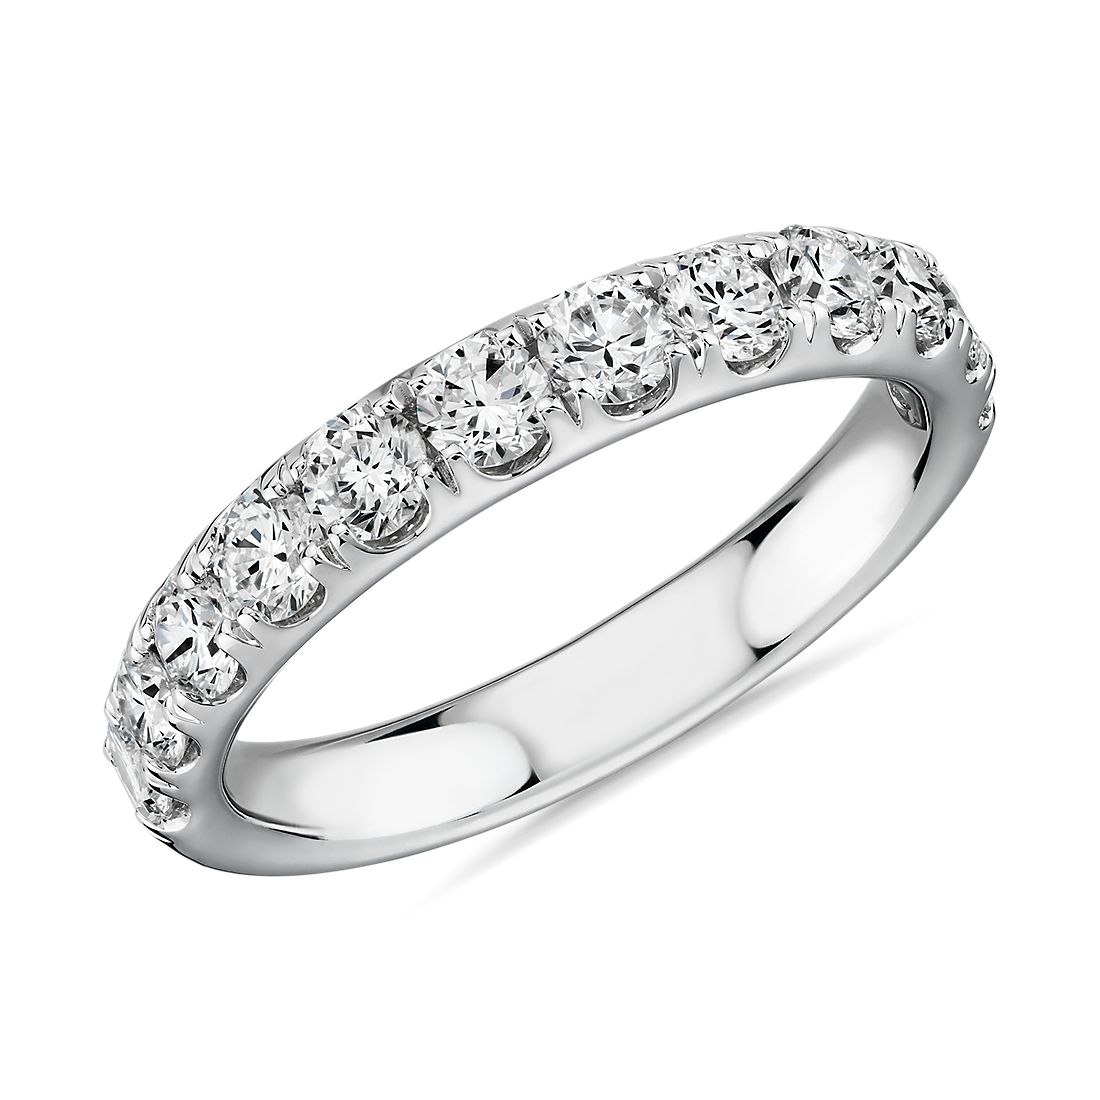 Riviera Pavé Diamond Ring in 14k White Gold (1 ct. tw.)